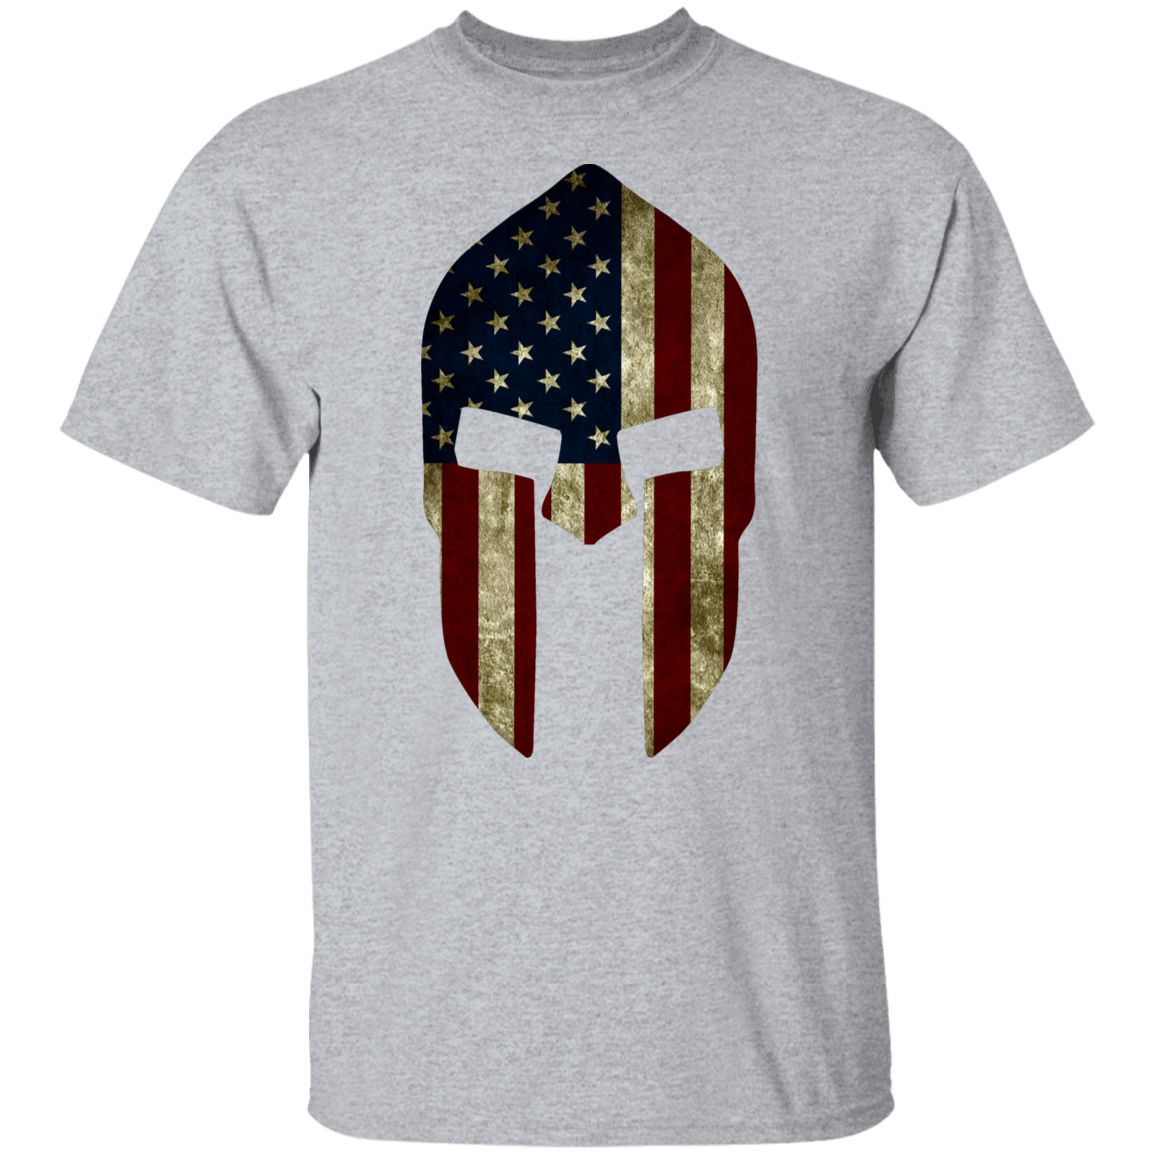 Men's American Spartan Inspired Shirt